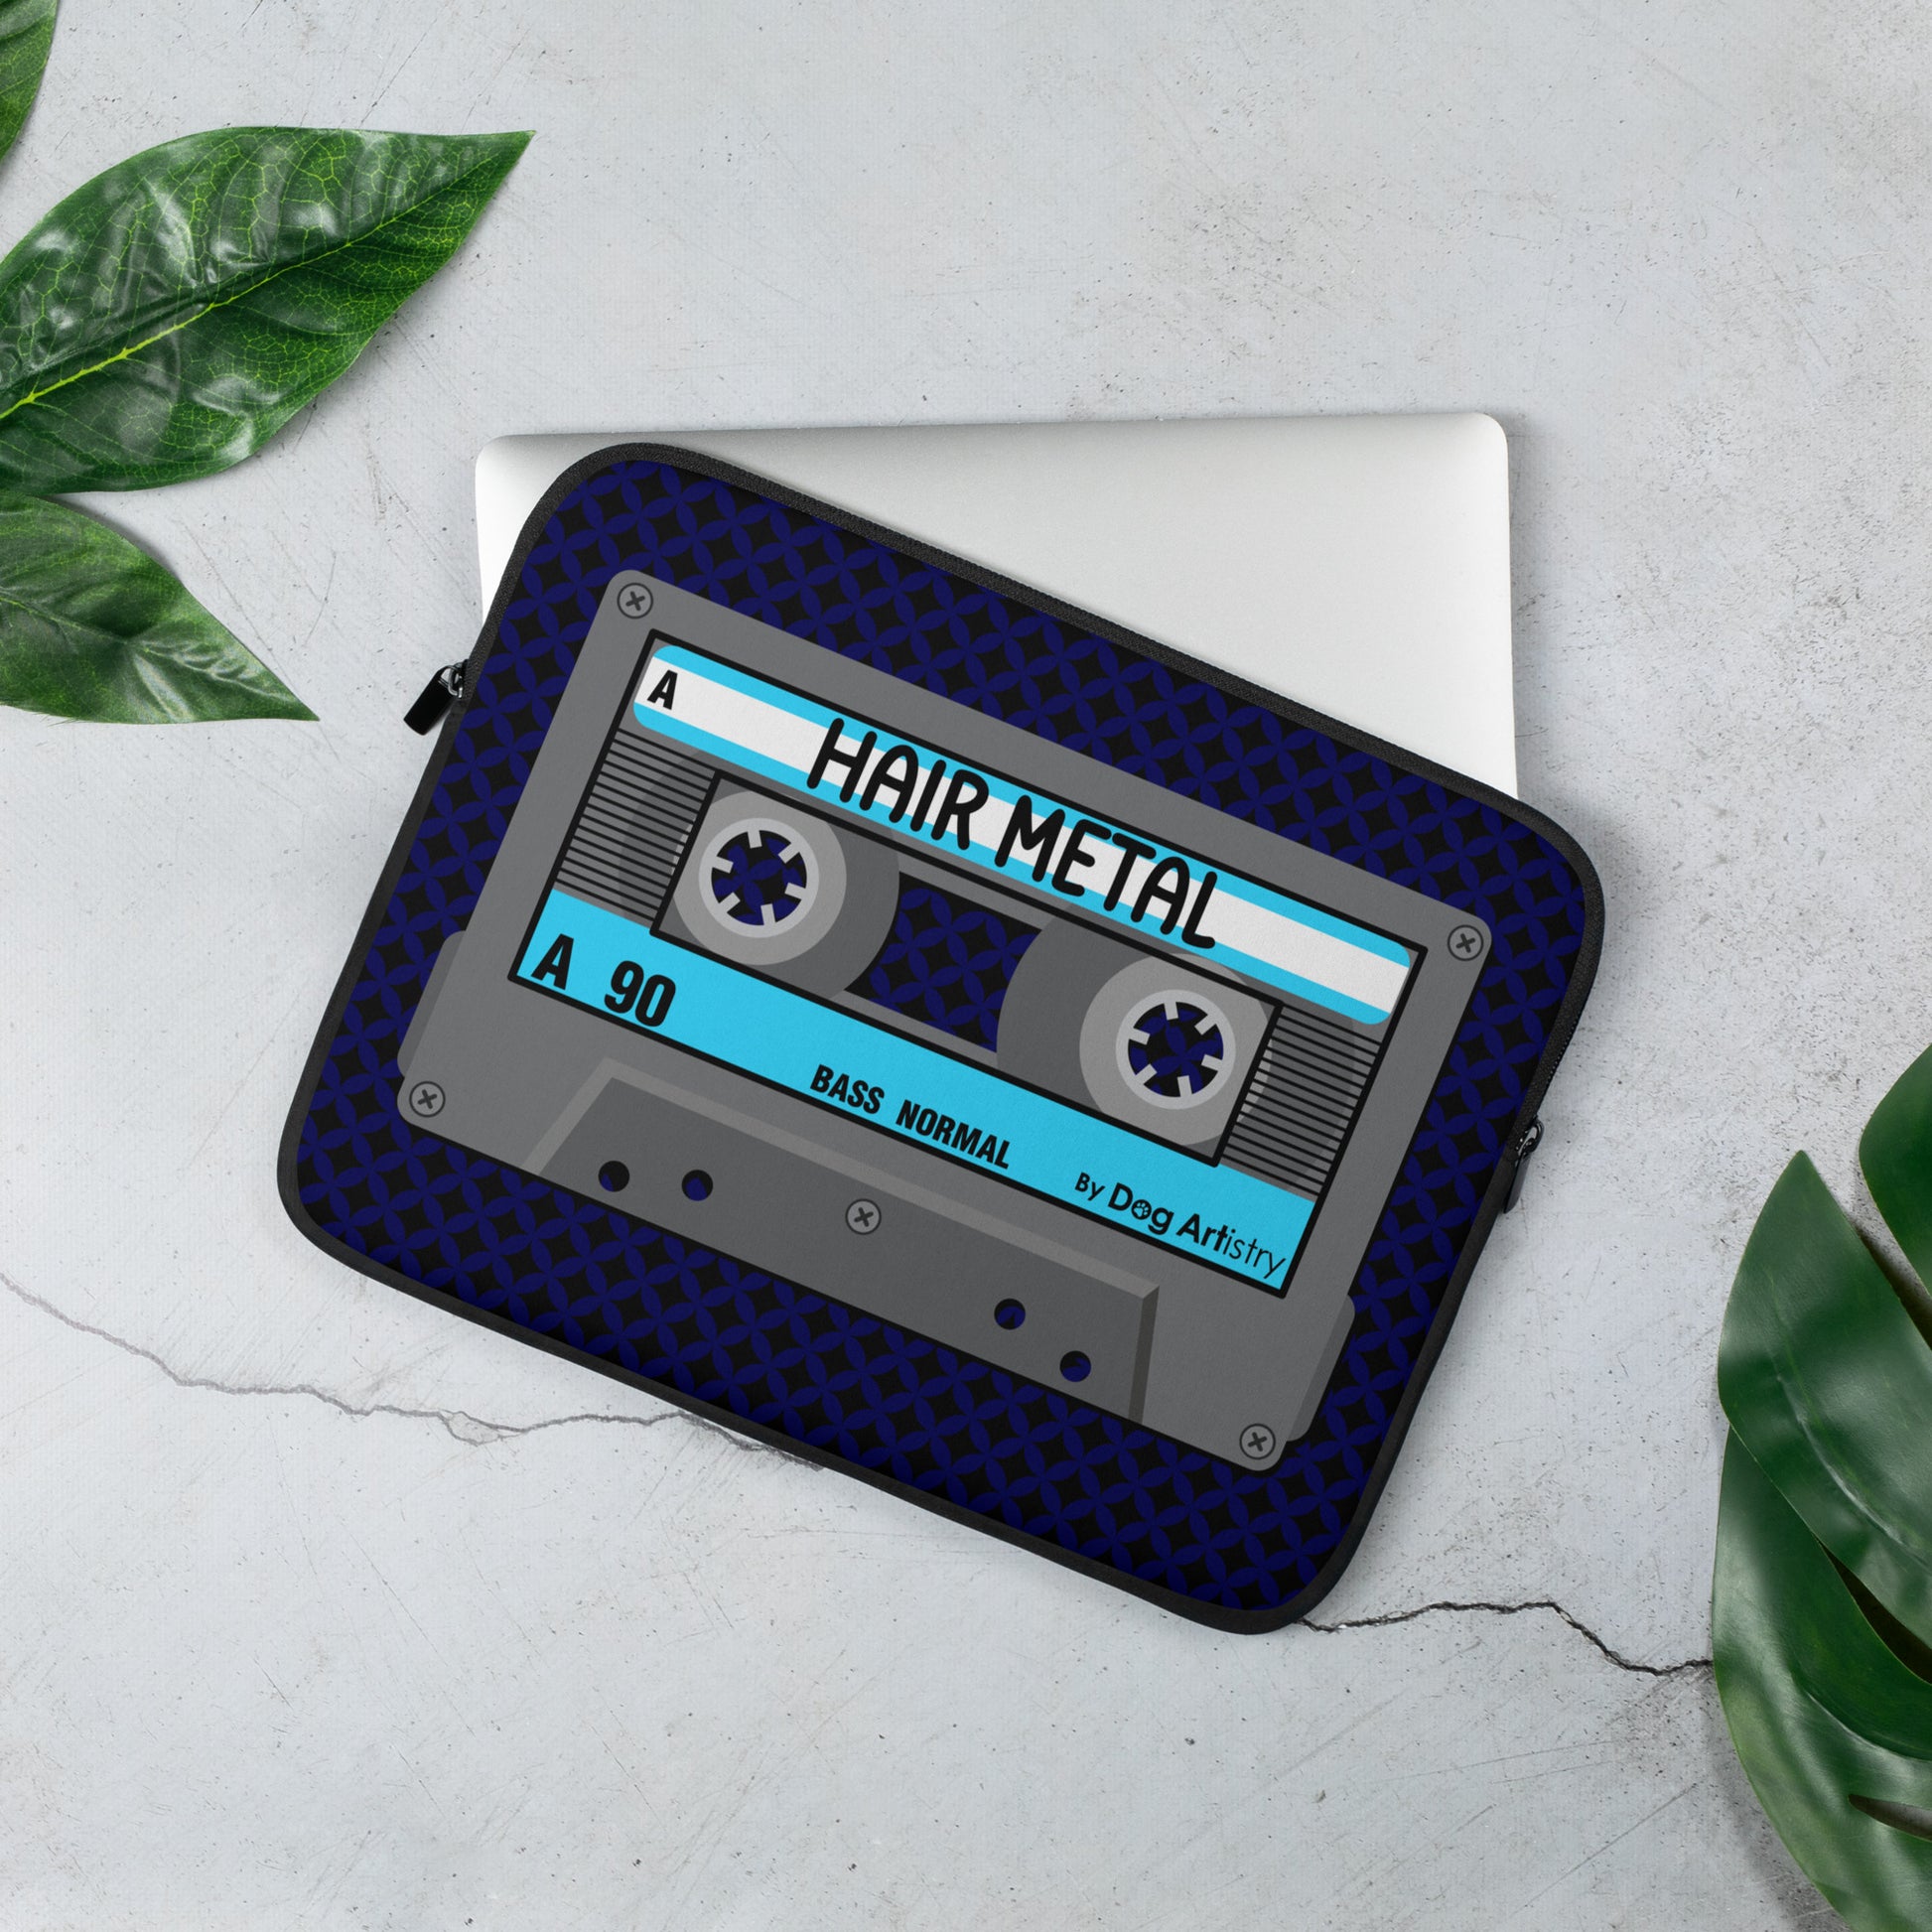 Cassette Tape Hair Metal music laptop sleeve designed by Dog Artistry.